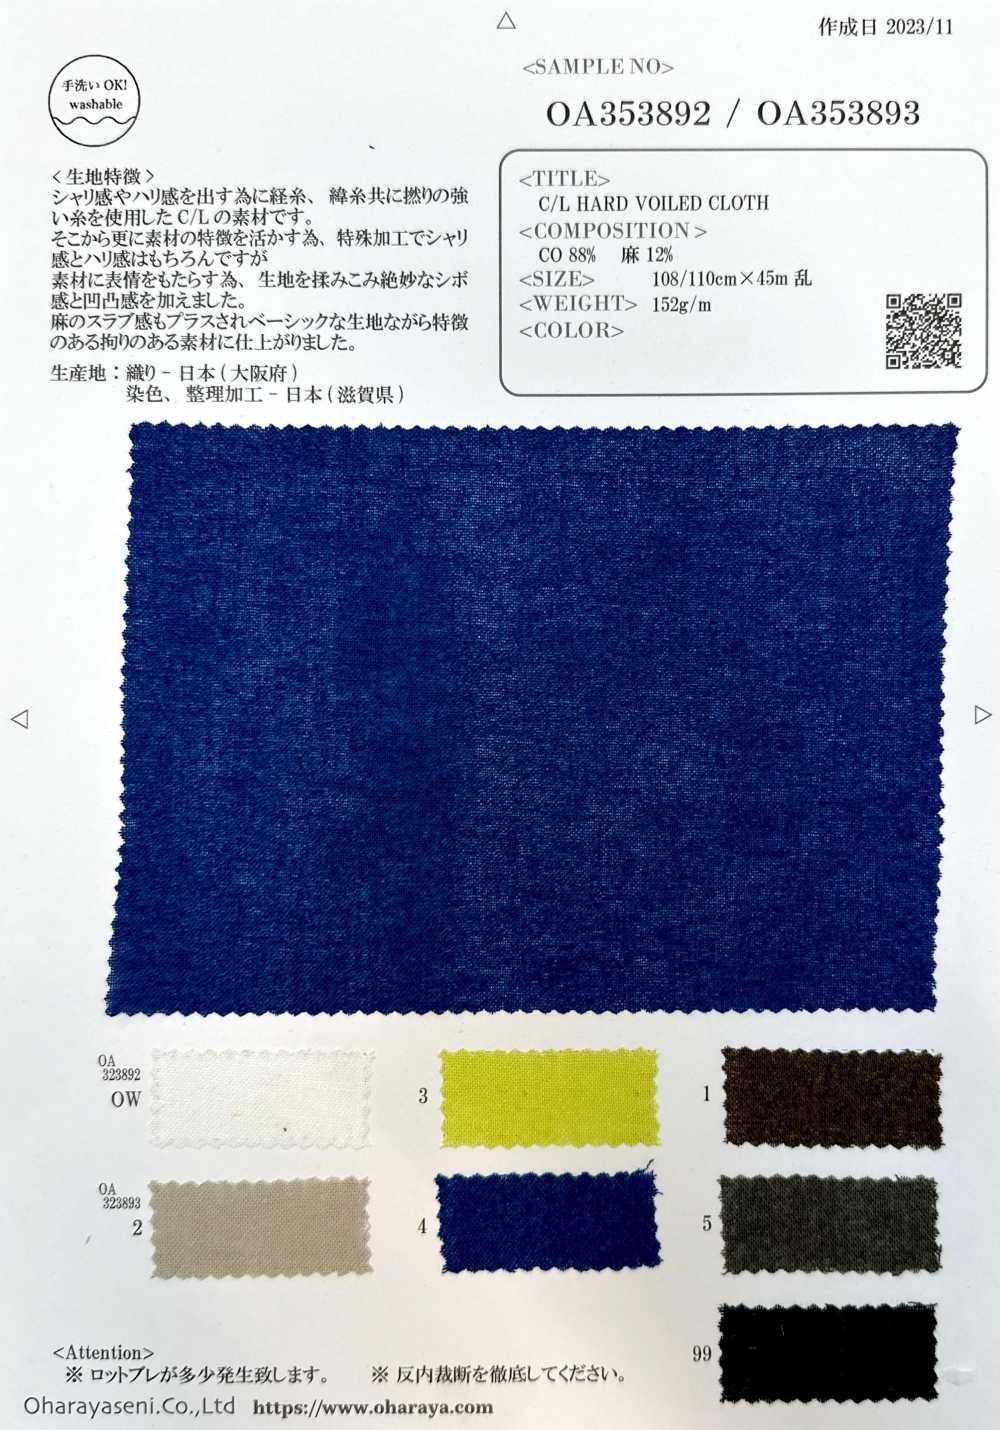 OA353892 C/L HARTES VOILED-TUCH[Textilgewebe] Oharayaseni